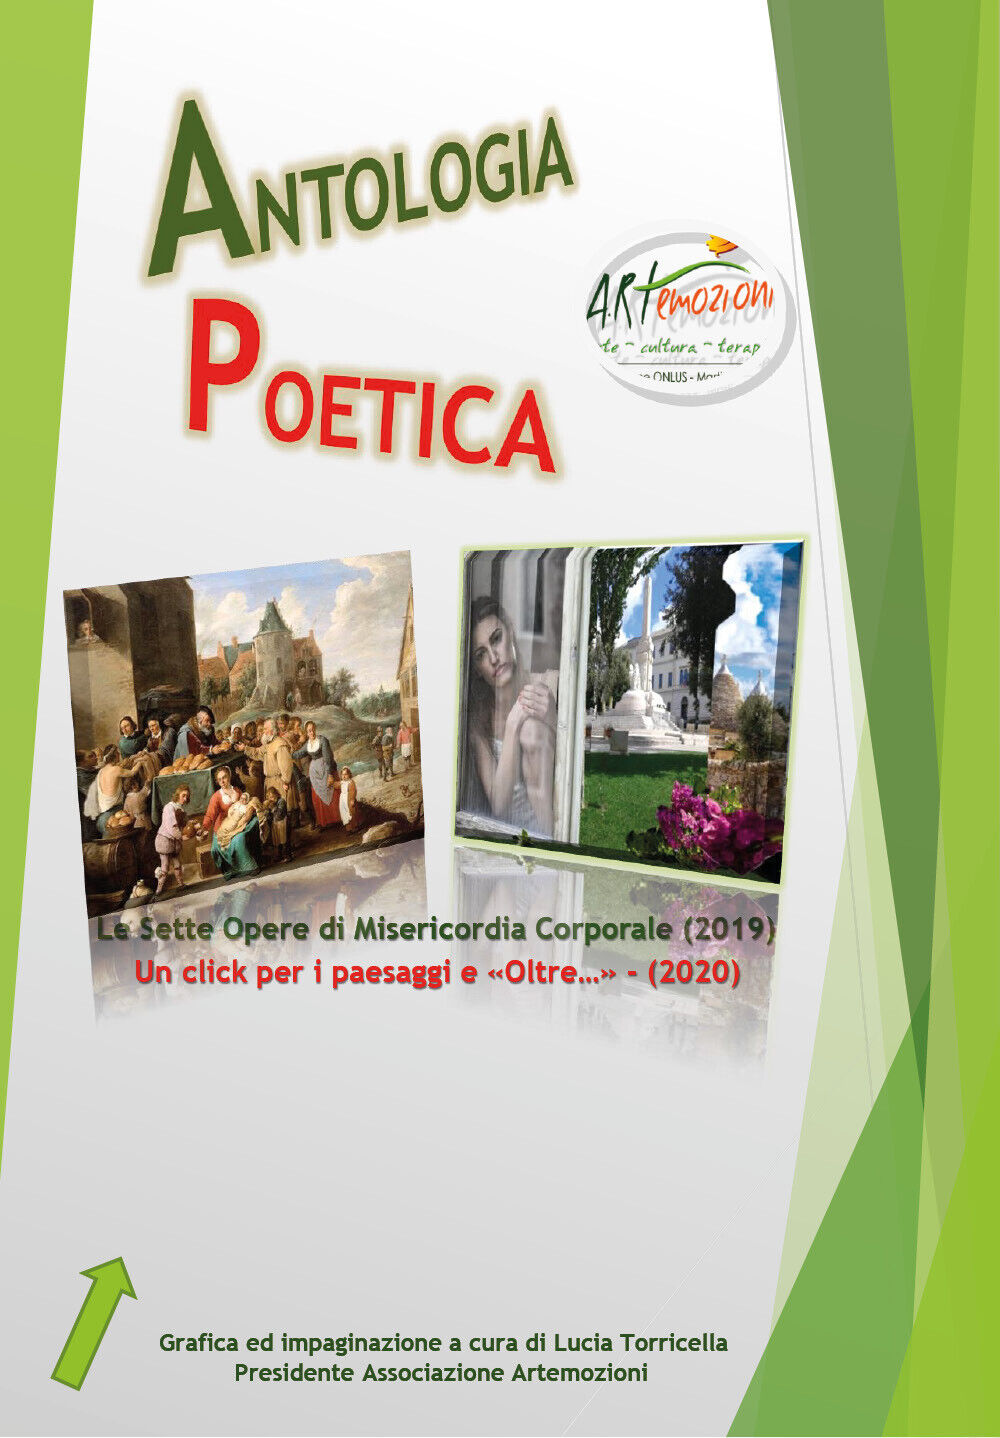 Antologia poetica (Biennale 2019-2020) di Artemozioni - Luciatorricella,  2021, 